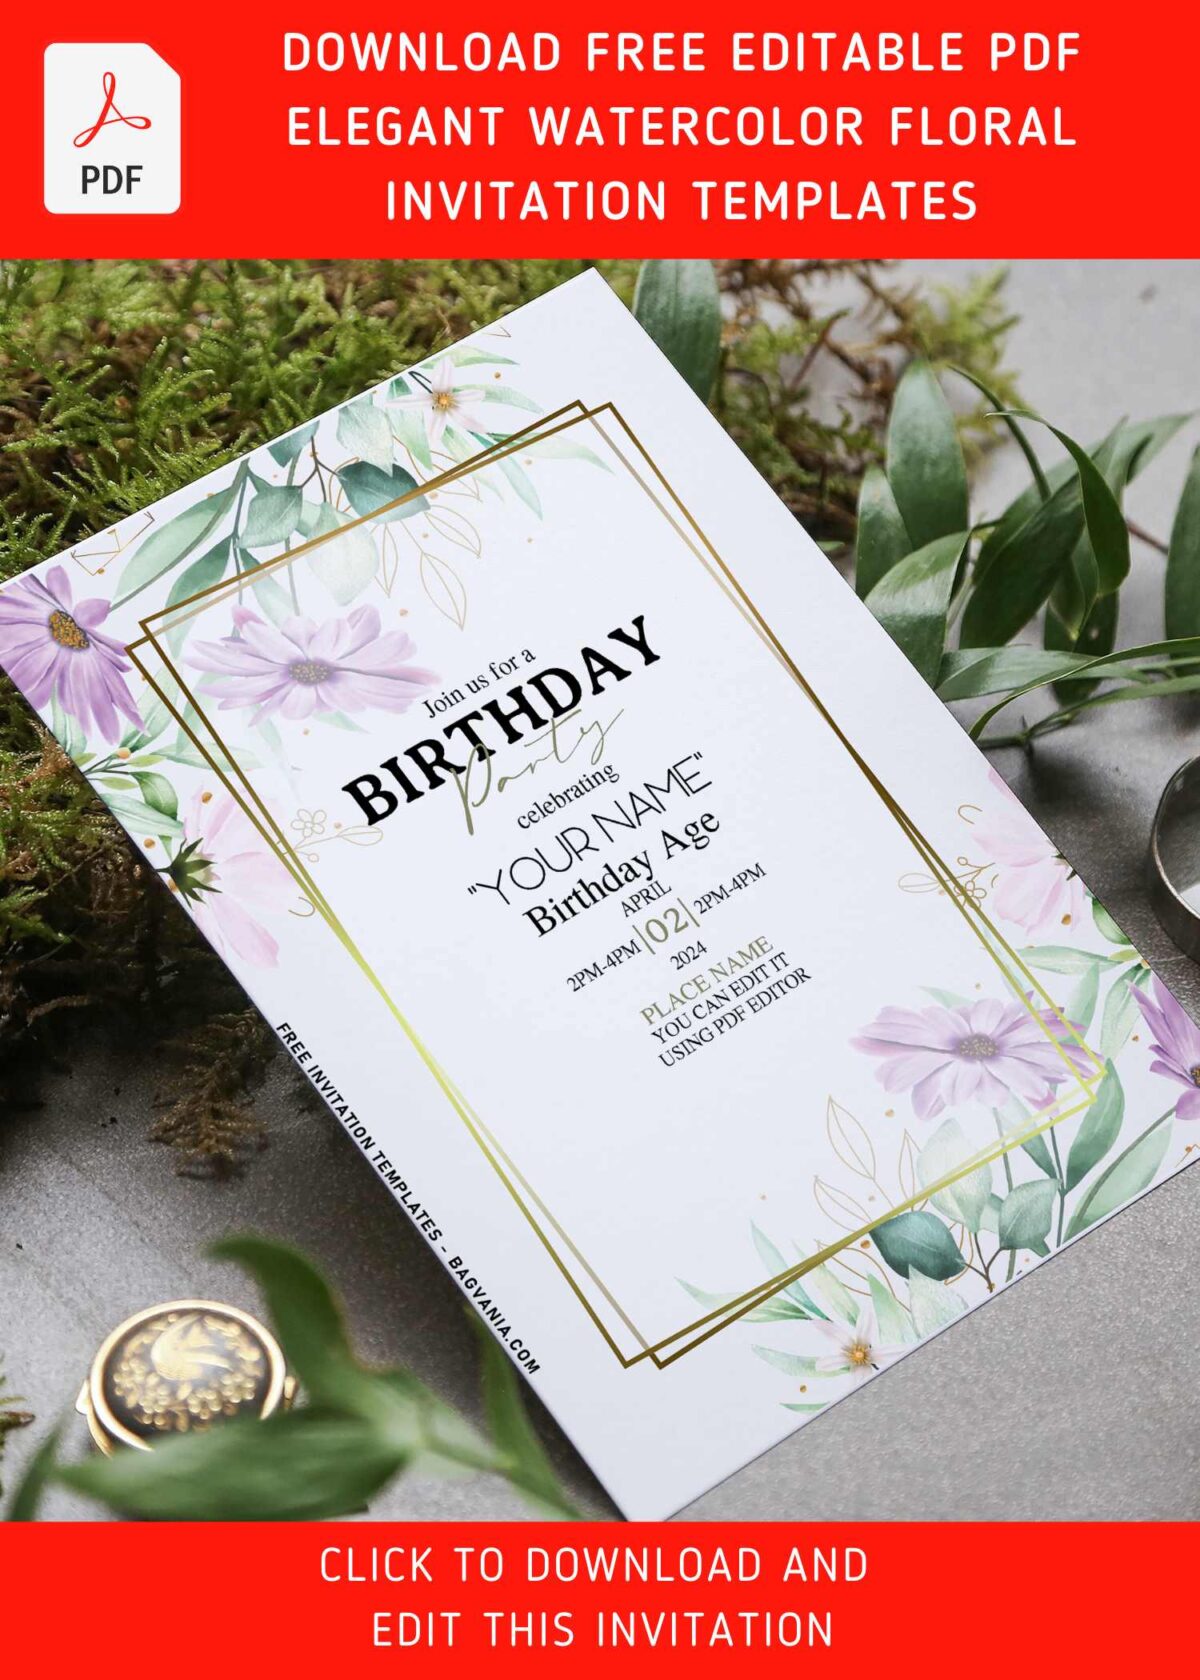 (Free Editable PDF) Spring Romance Birthday Invitation Templates with velum white backdrop